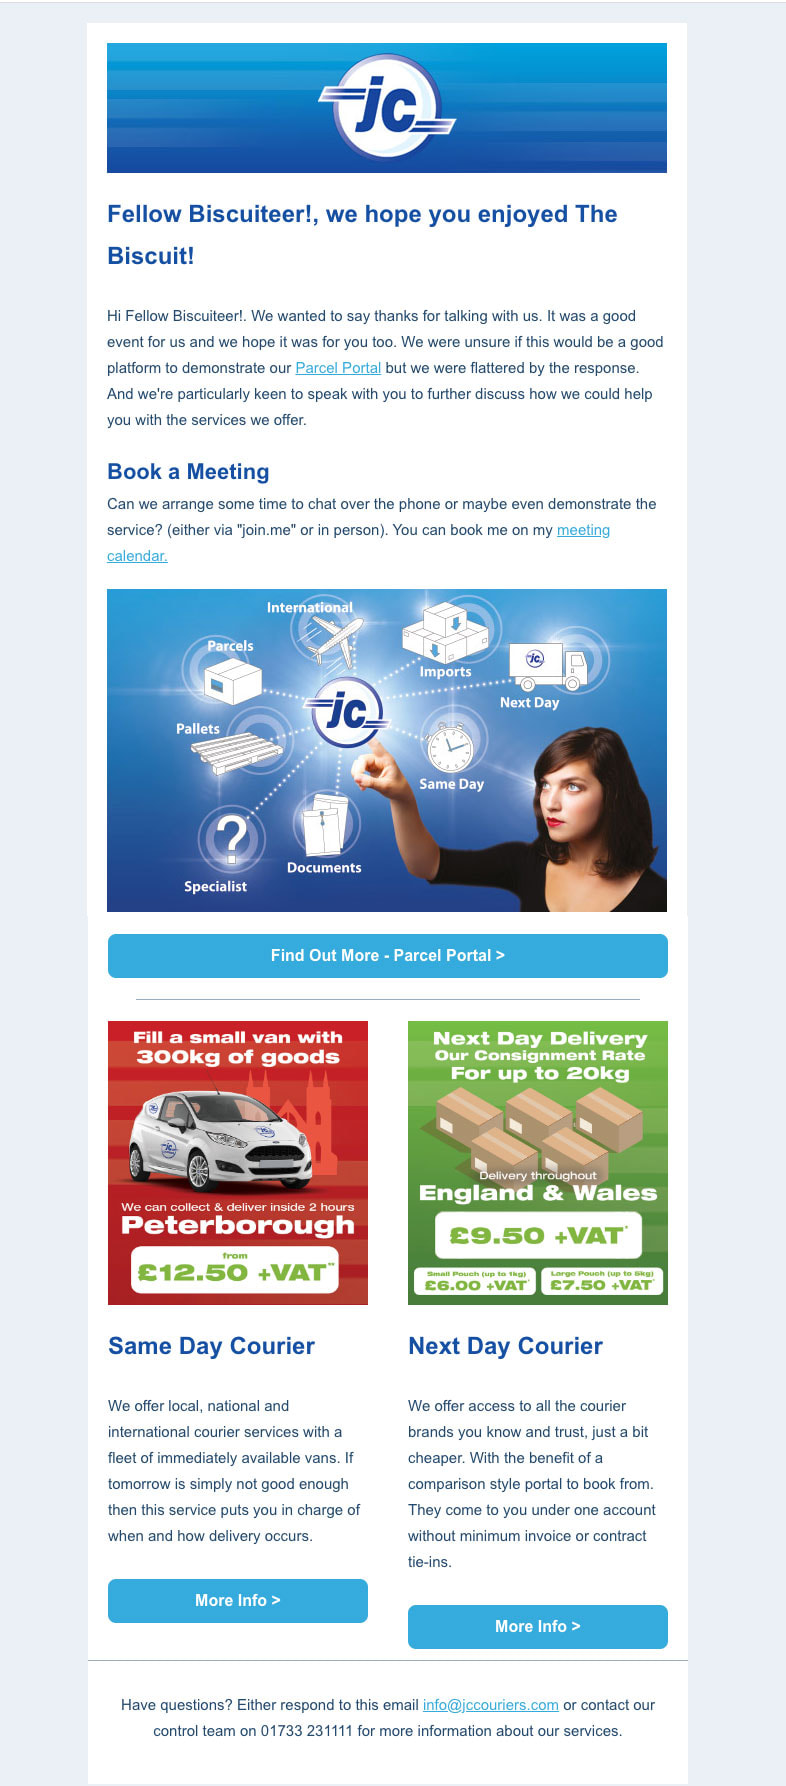 Email Marketing Peterborough